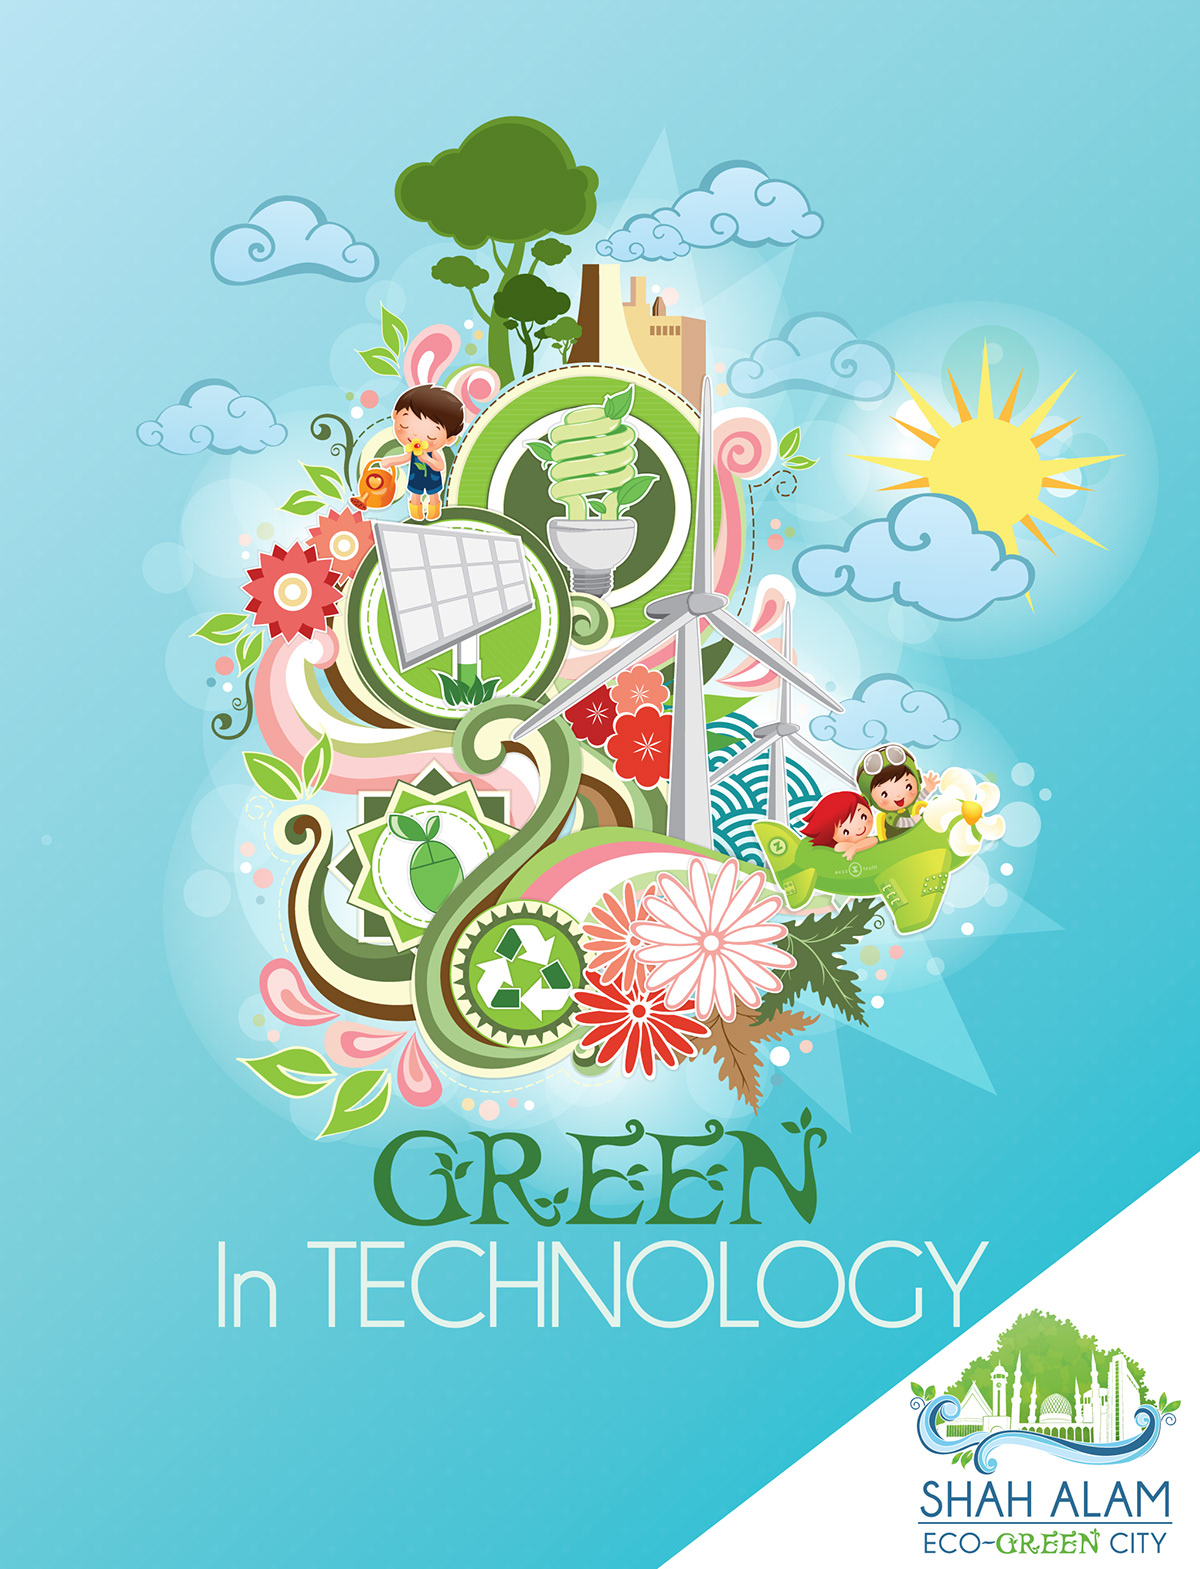 shah alam Eco-green city Vector Illustration City branding